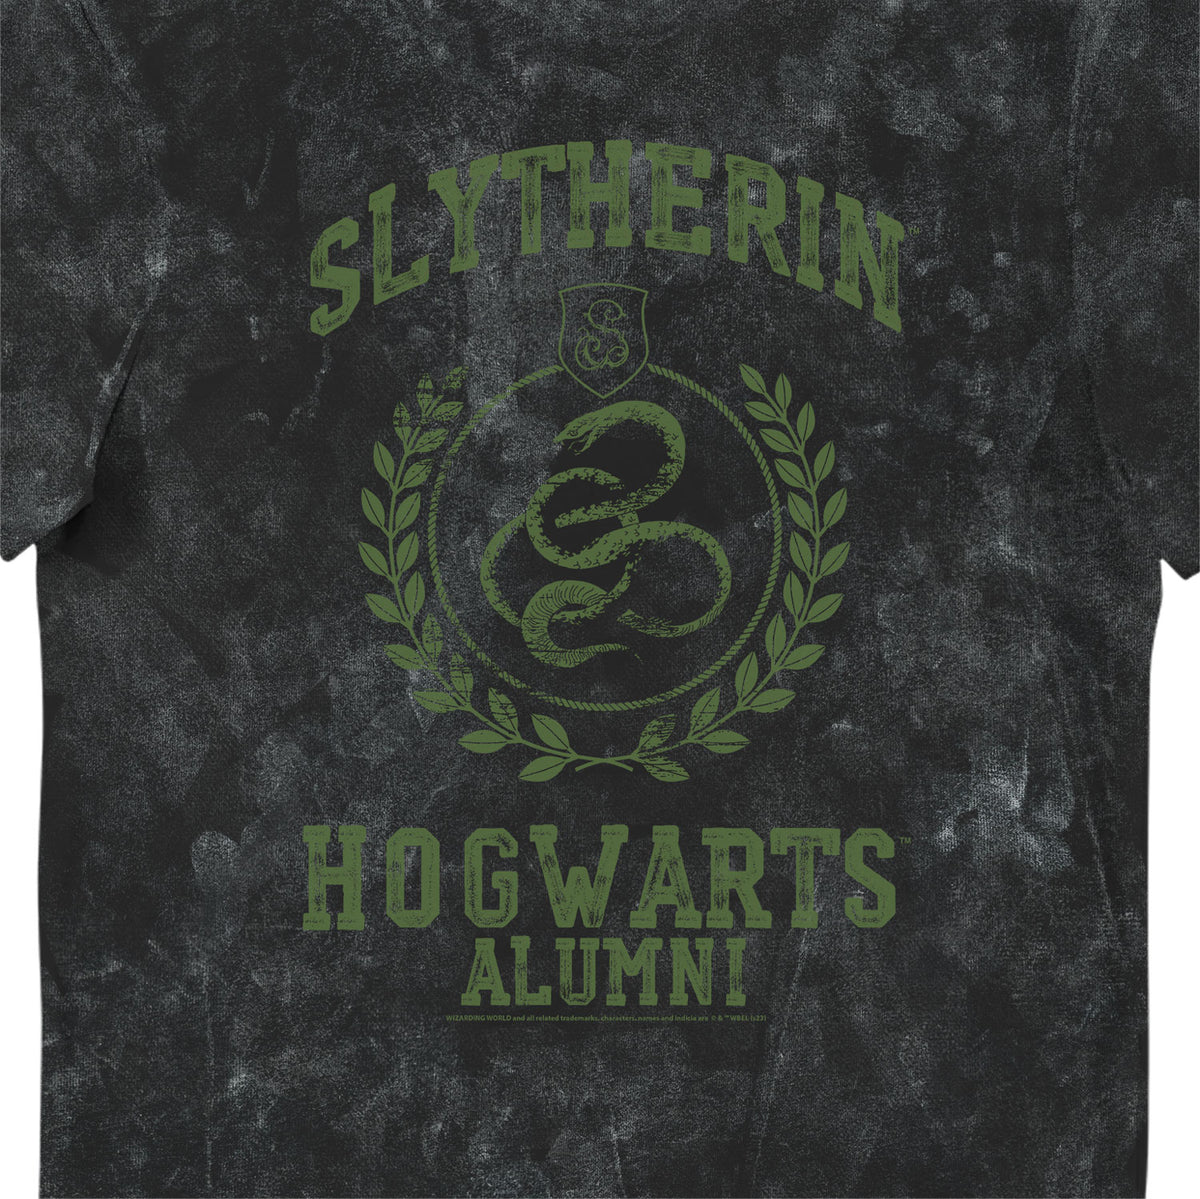 Harry Potter Slytherin Hogwarts Alumni Vintage Style Adults T-Shirt